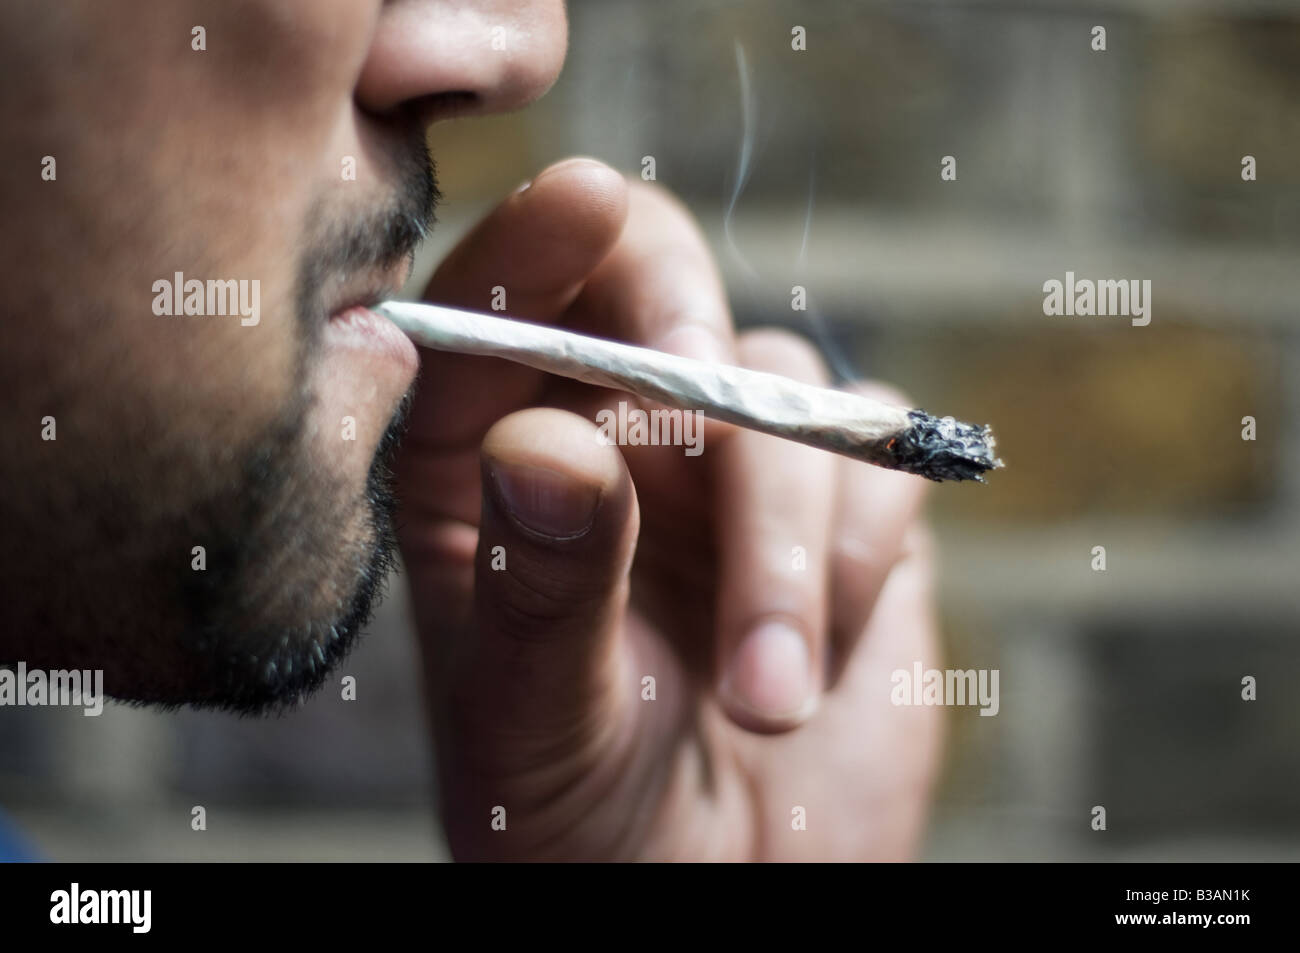 Reino Unido, Inglaterra, Londres, cerca del hombre fumando cannabis Foto de stock